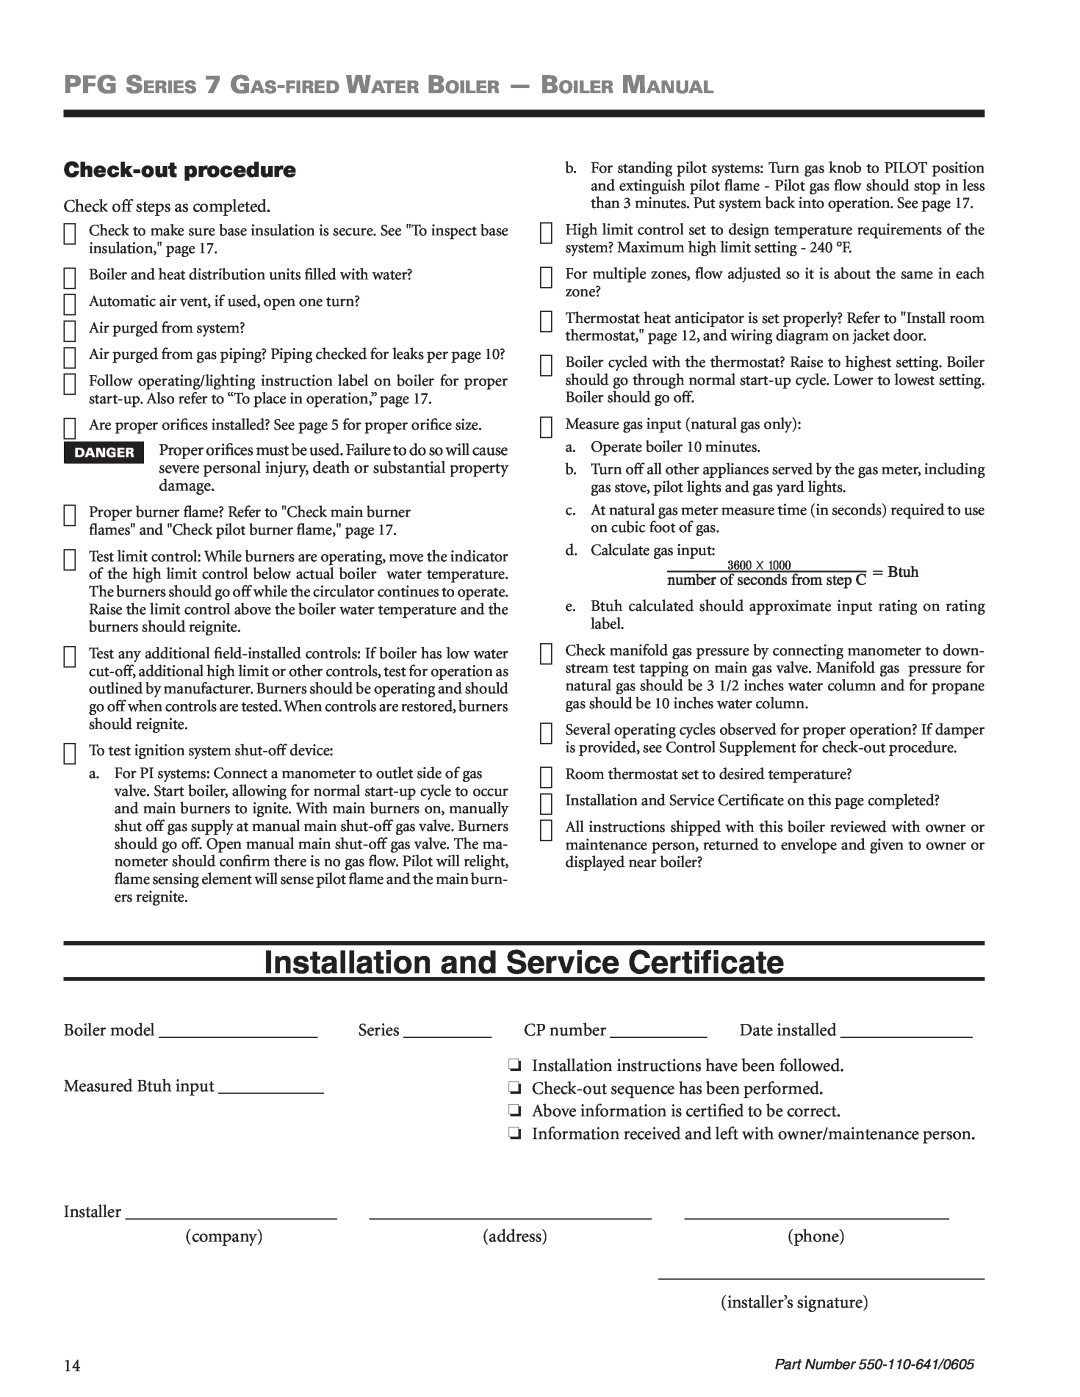 Weil-McLain PFG-7 manual Check-outprocedure, Installation and Service Certificate 